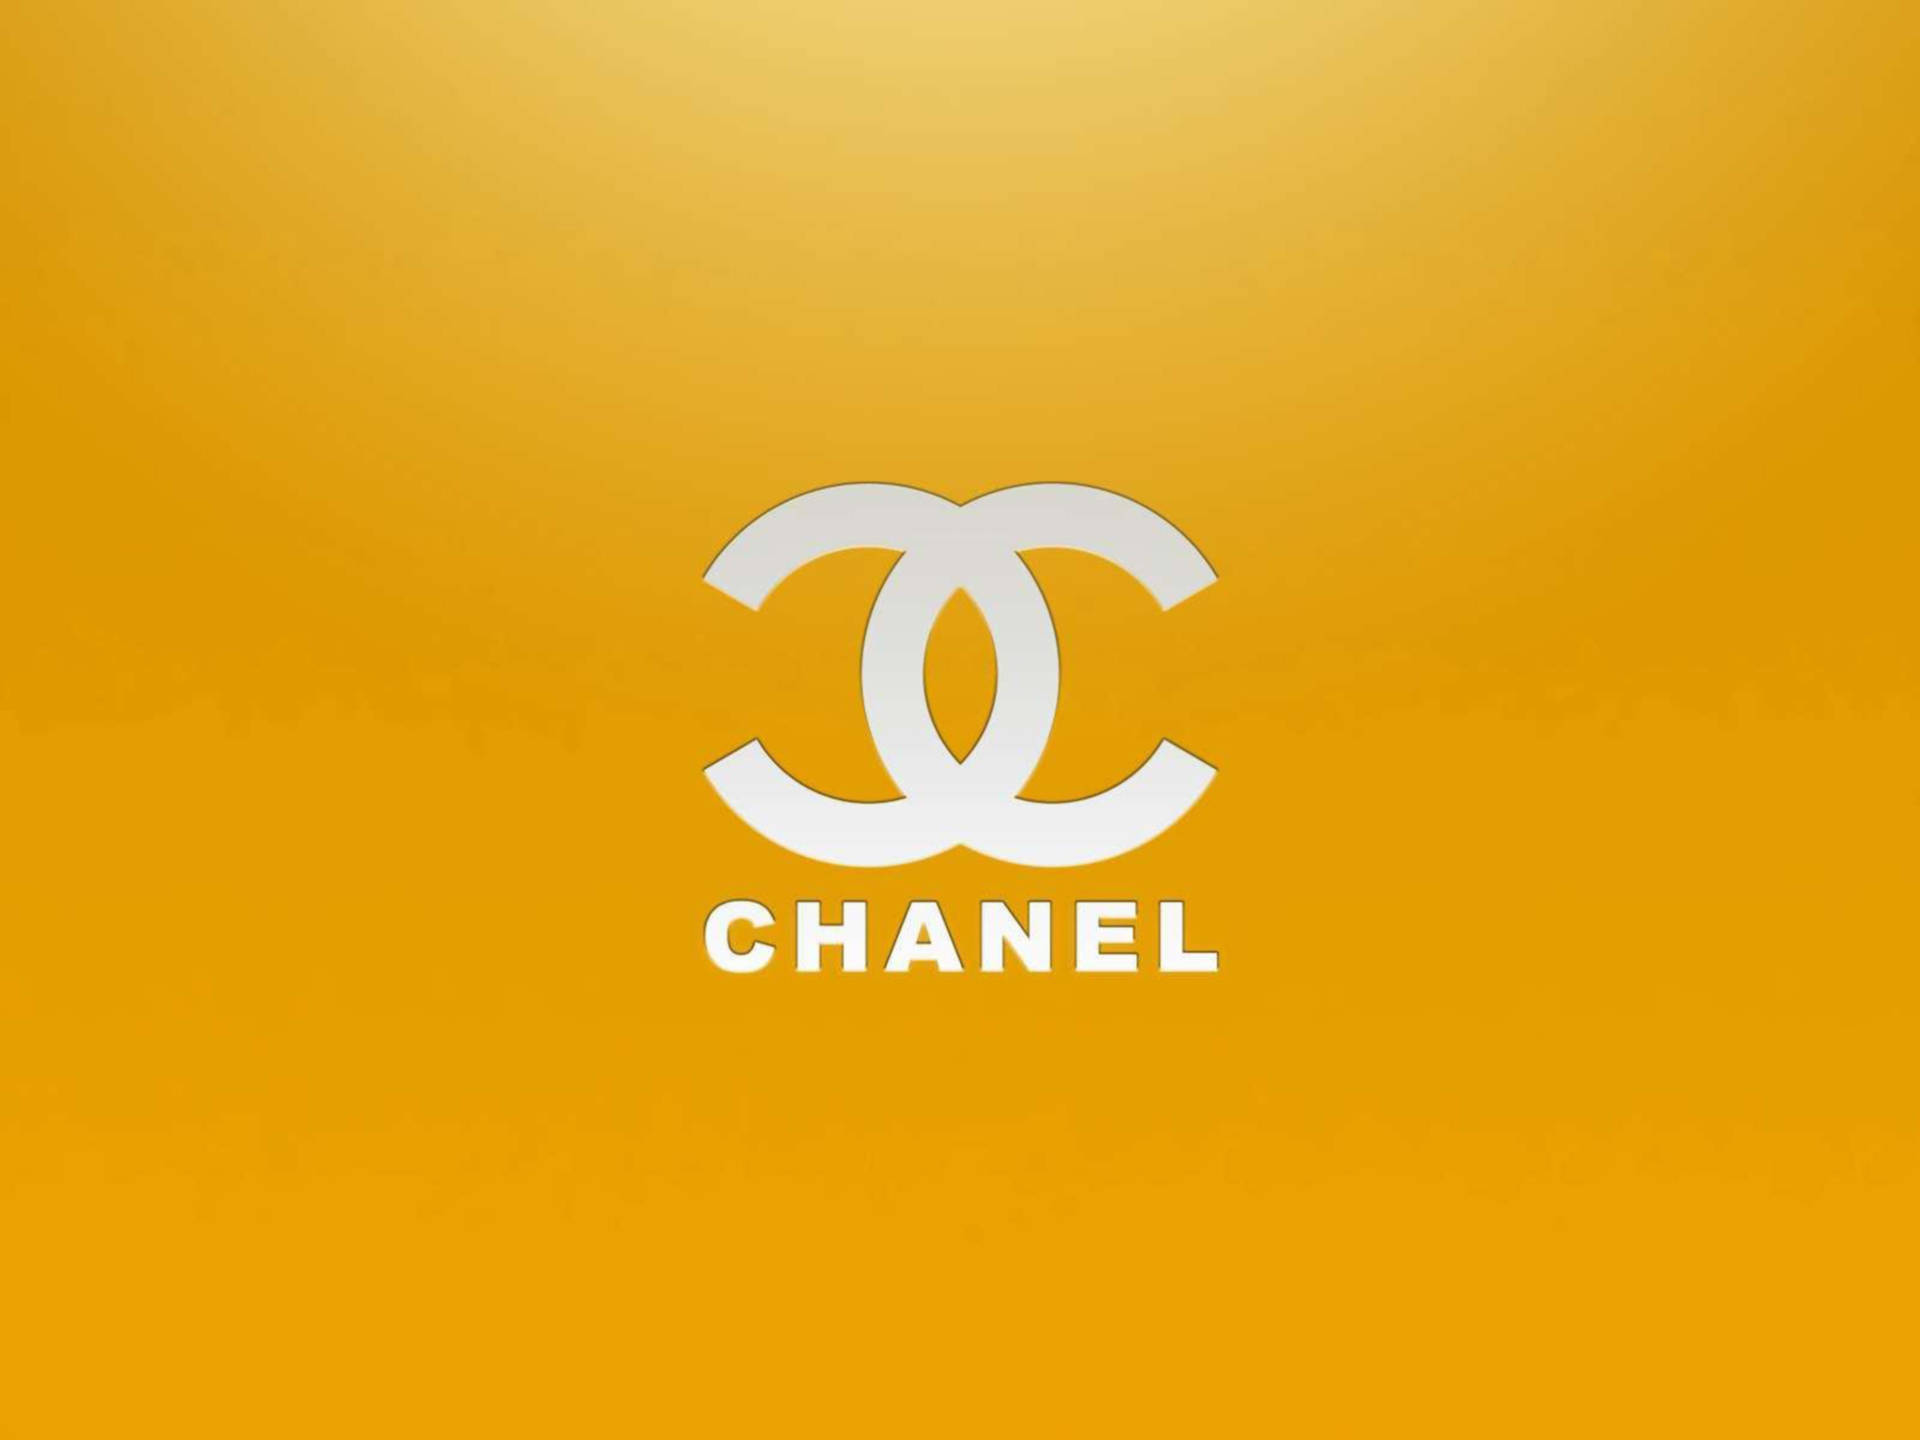 White Chanel Logo On Golden Yellow Background